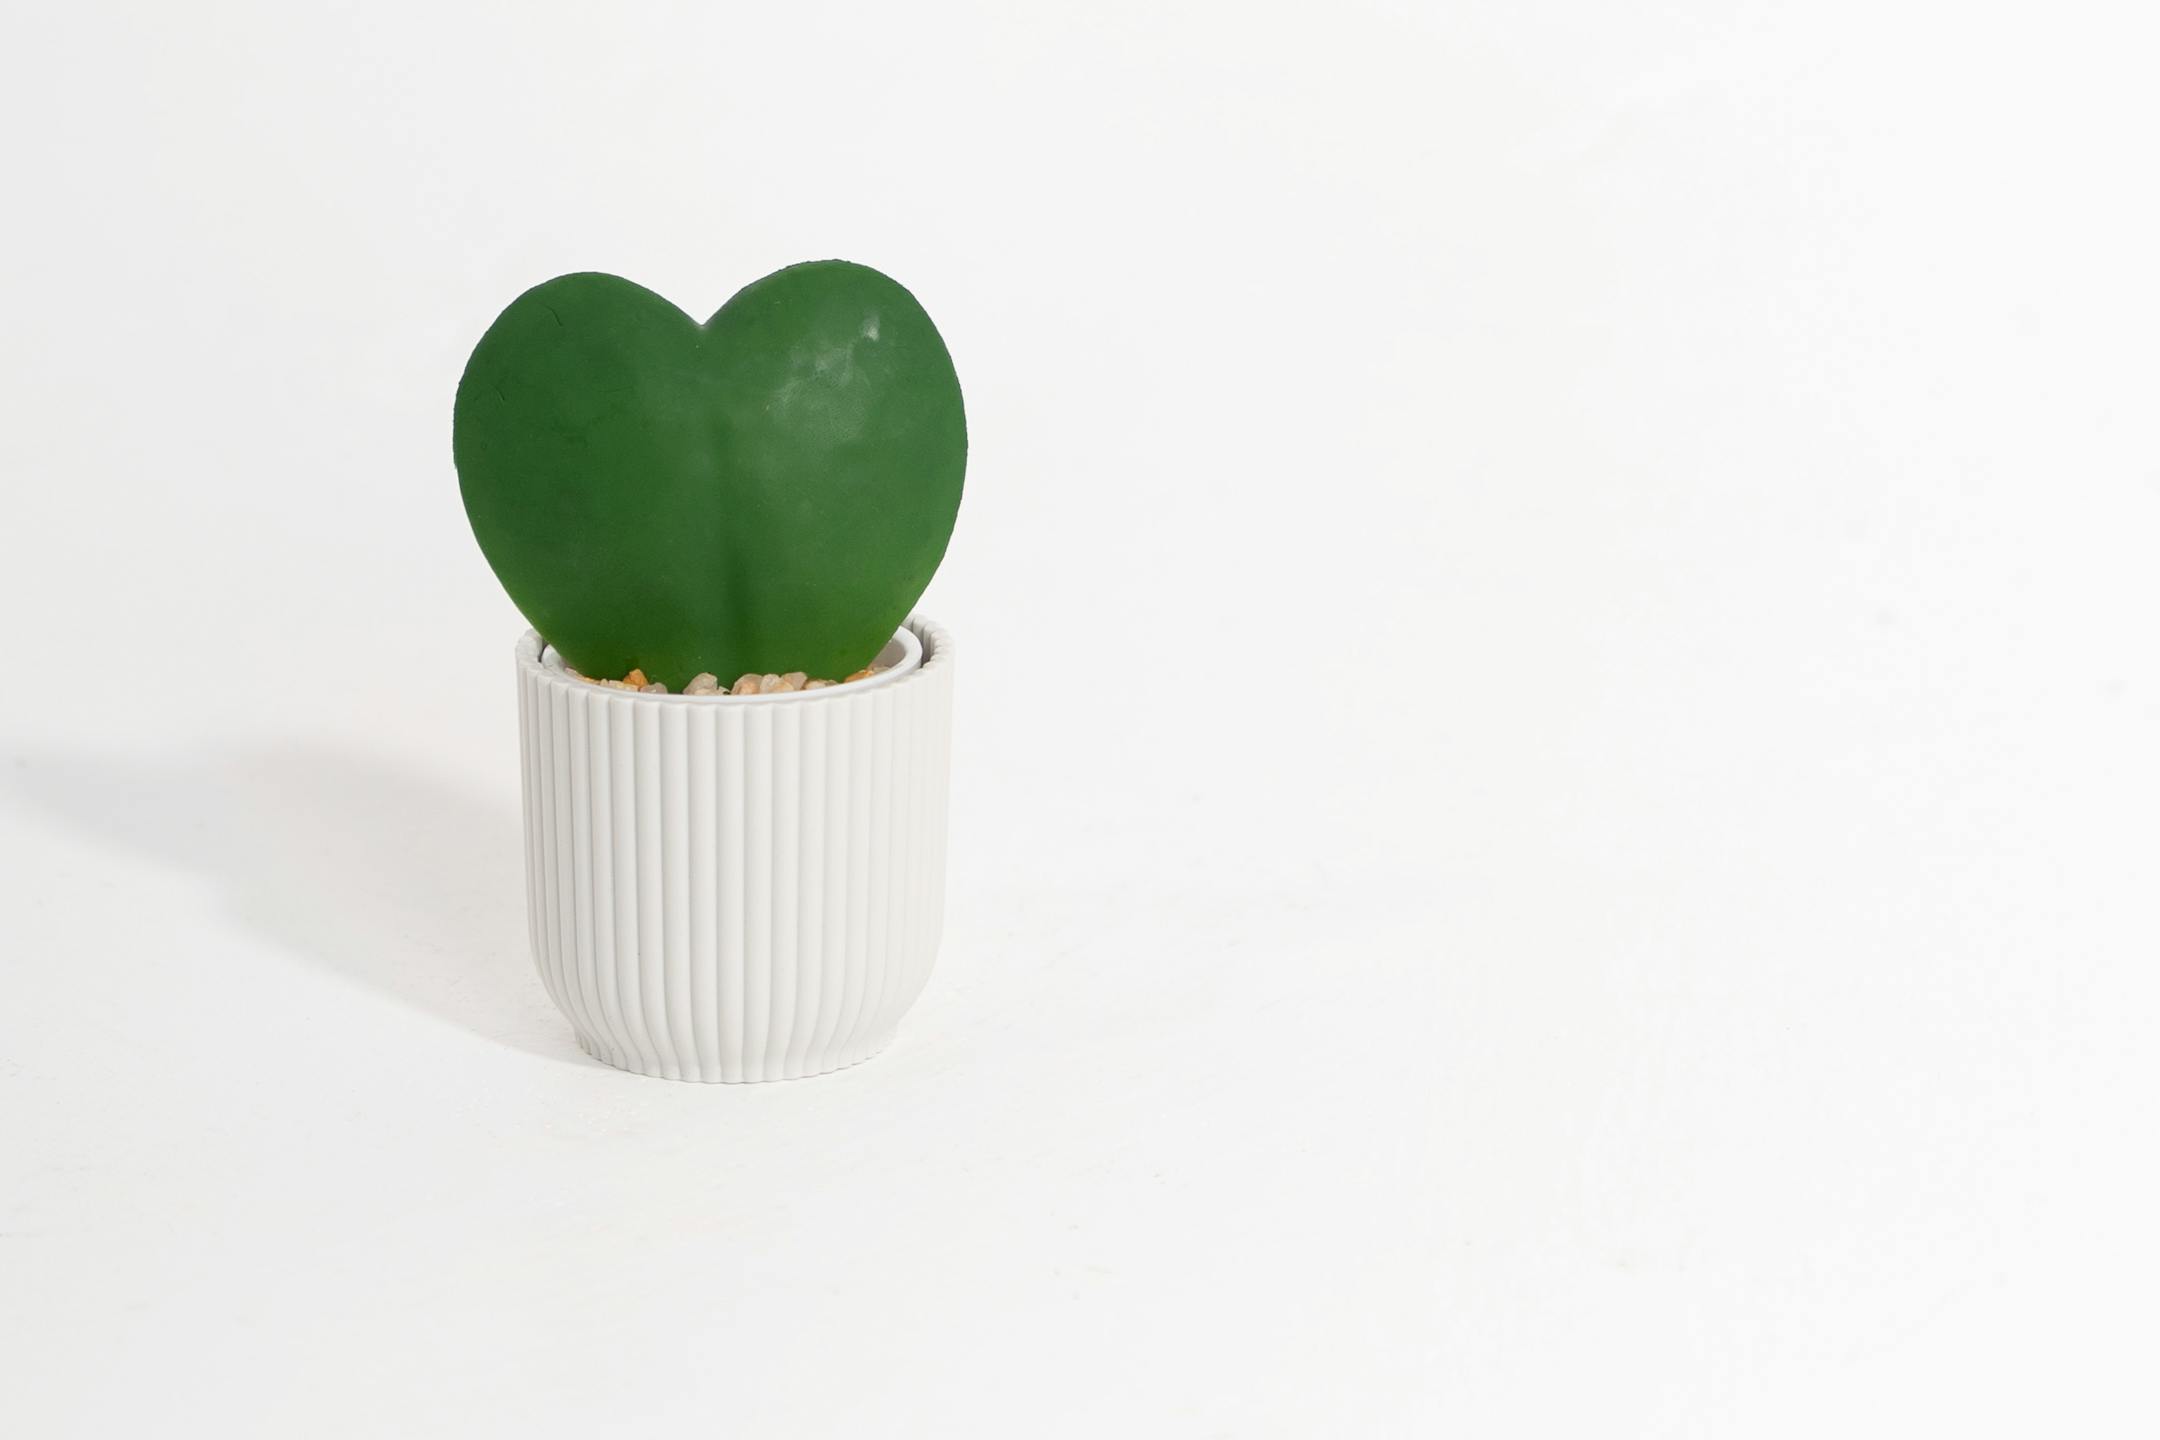 Artificial hoya heart plant in white pot